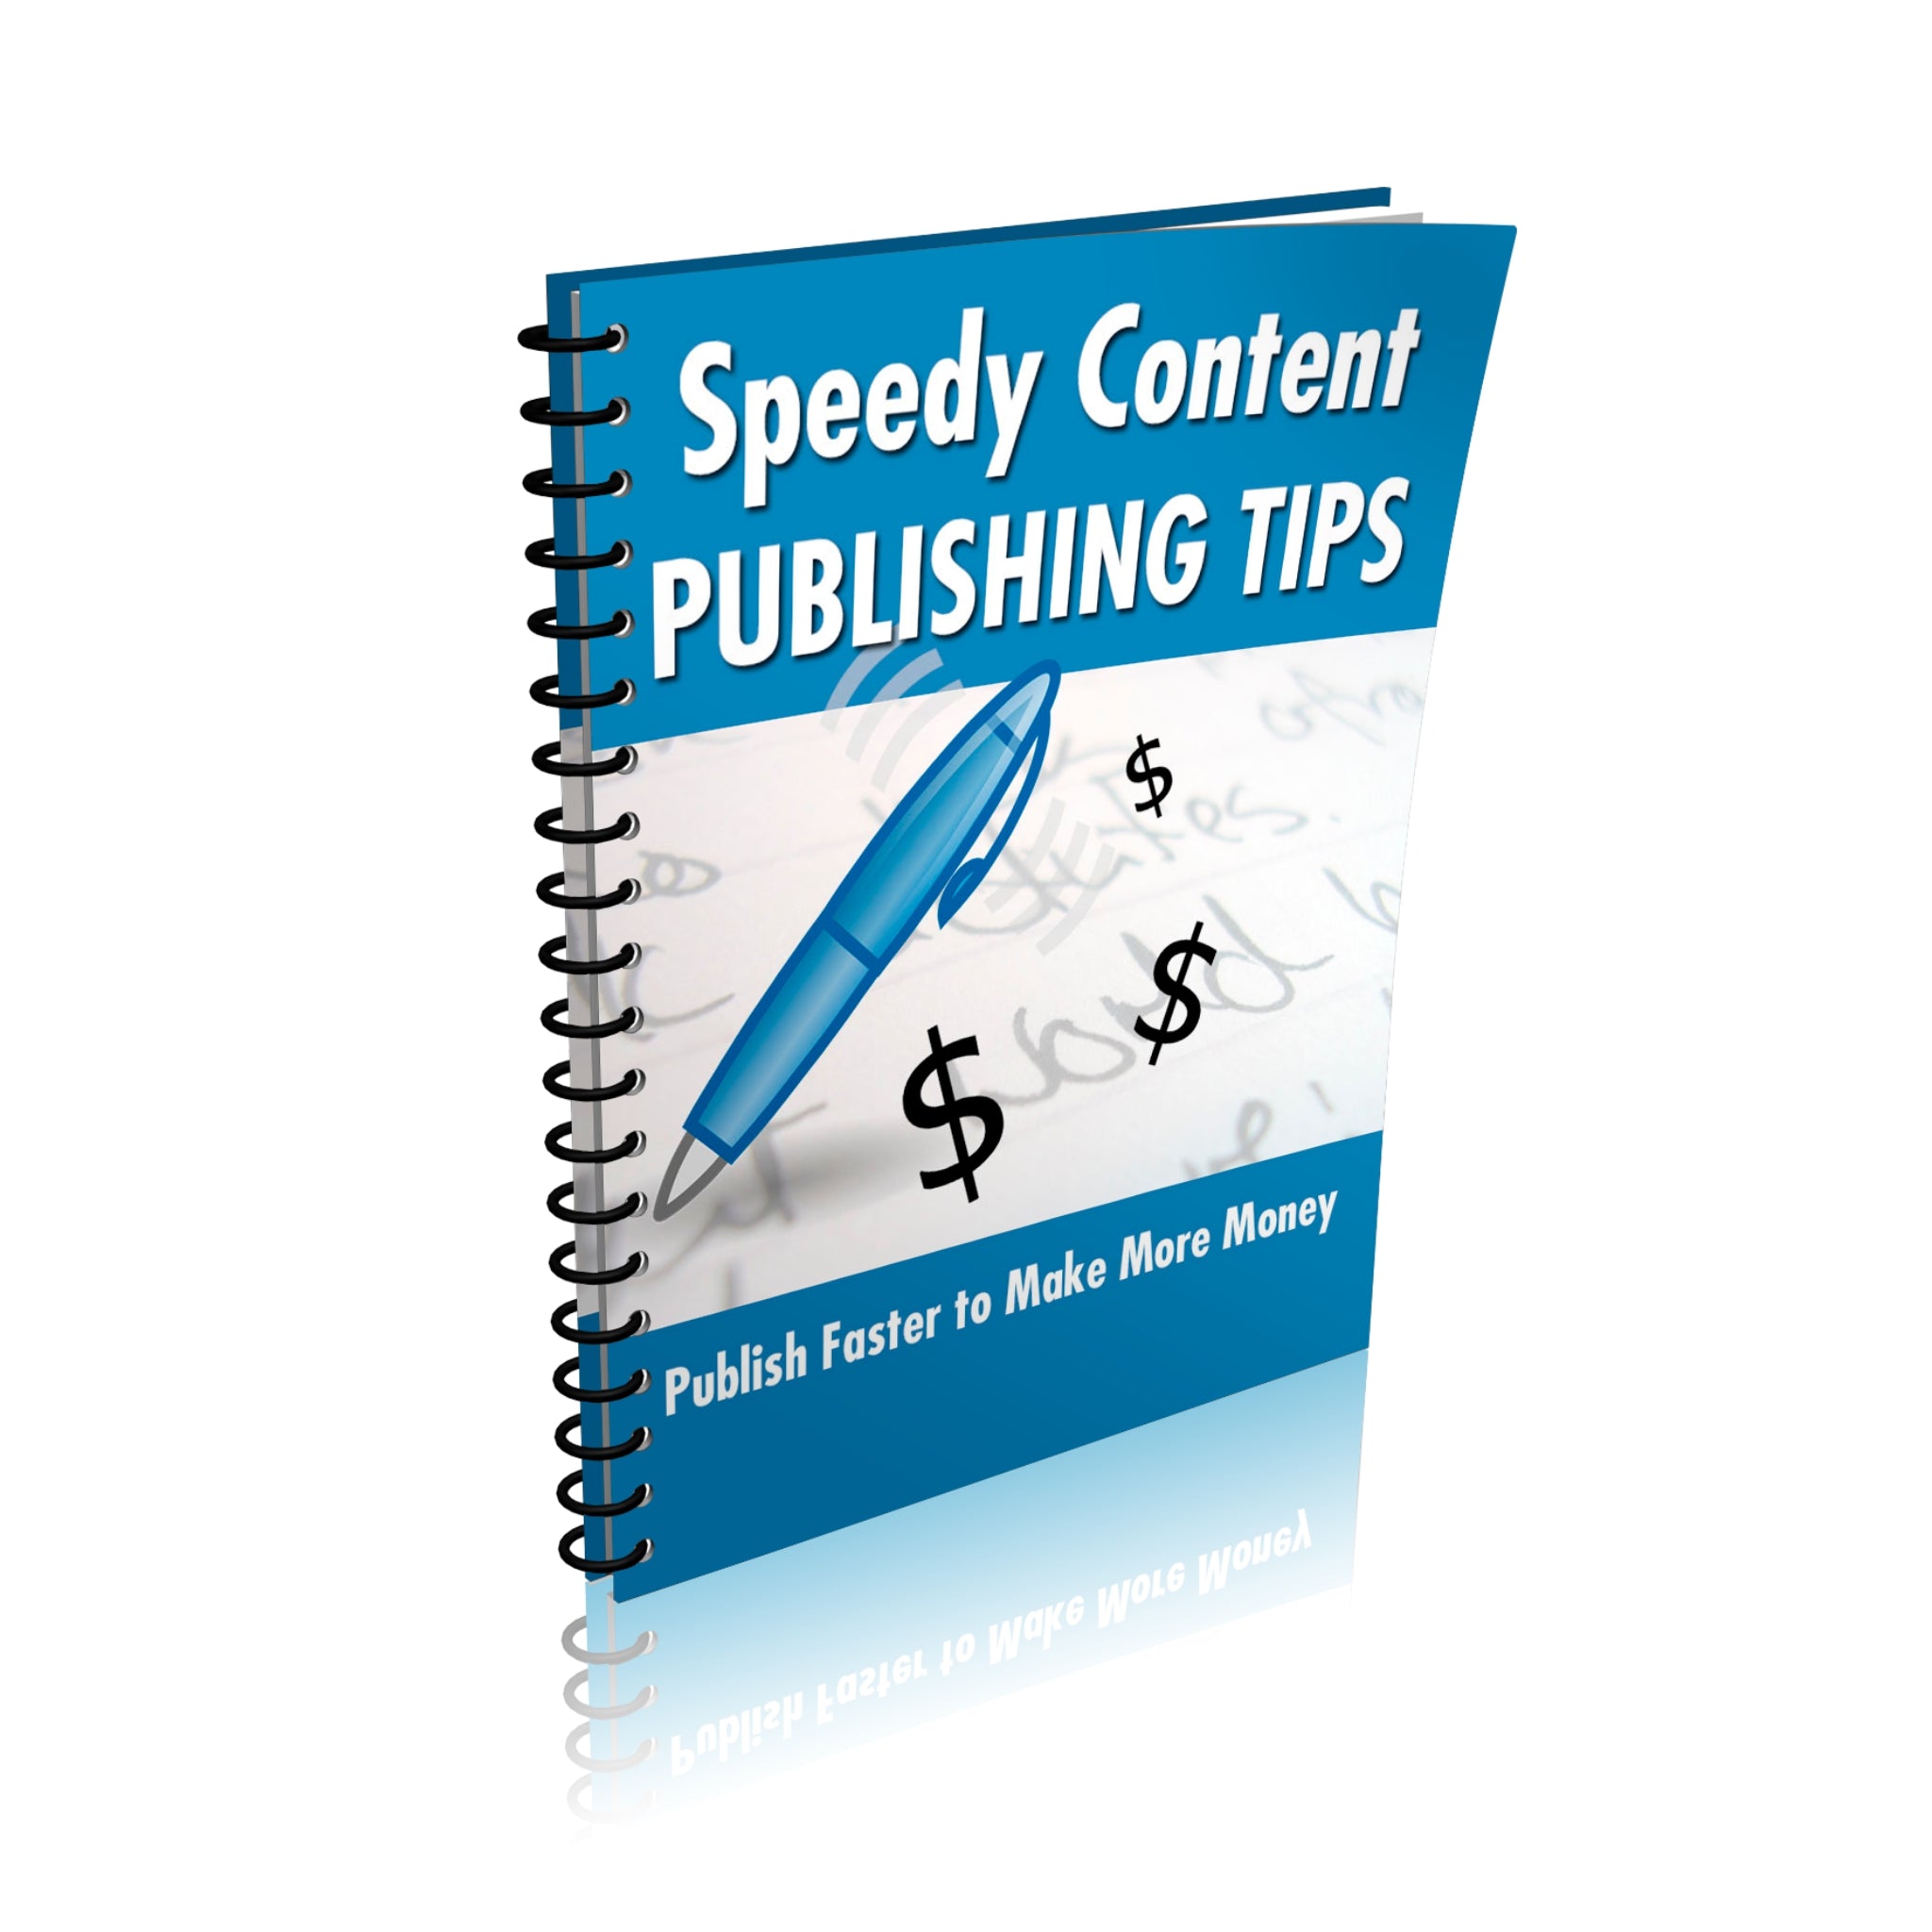 Speedy Content Publishing Tips Ebook